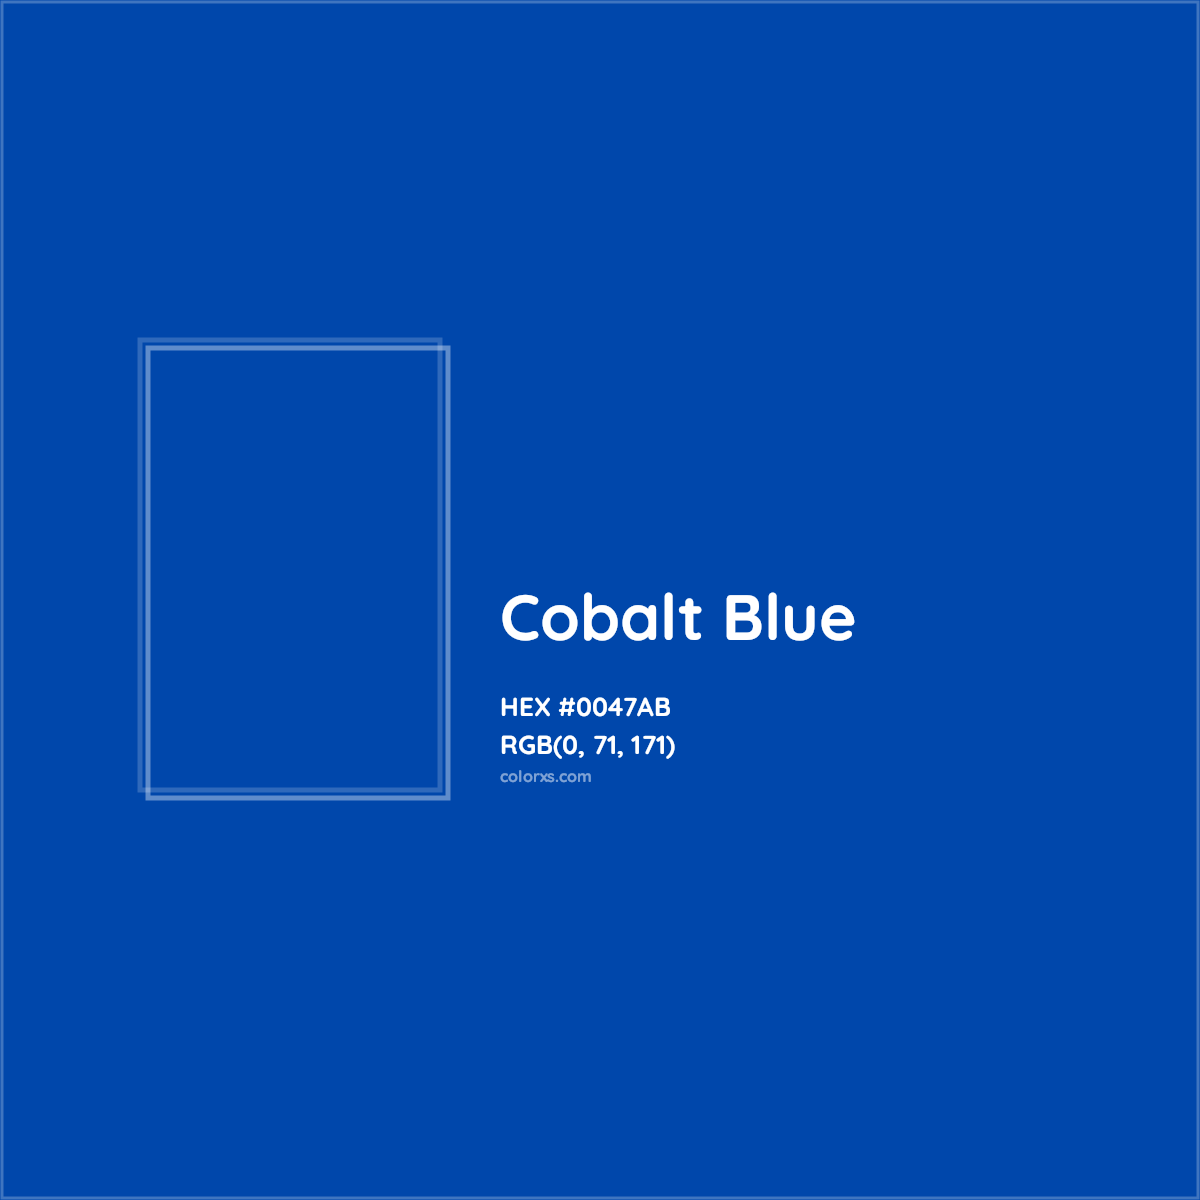 7. Cobalt Blue Hair with Undercut - wide 4